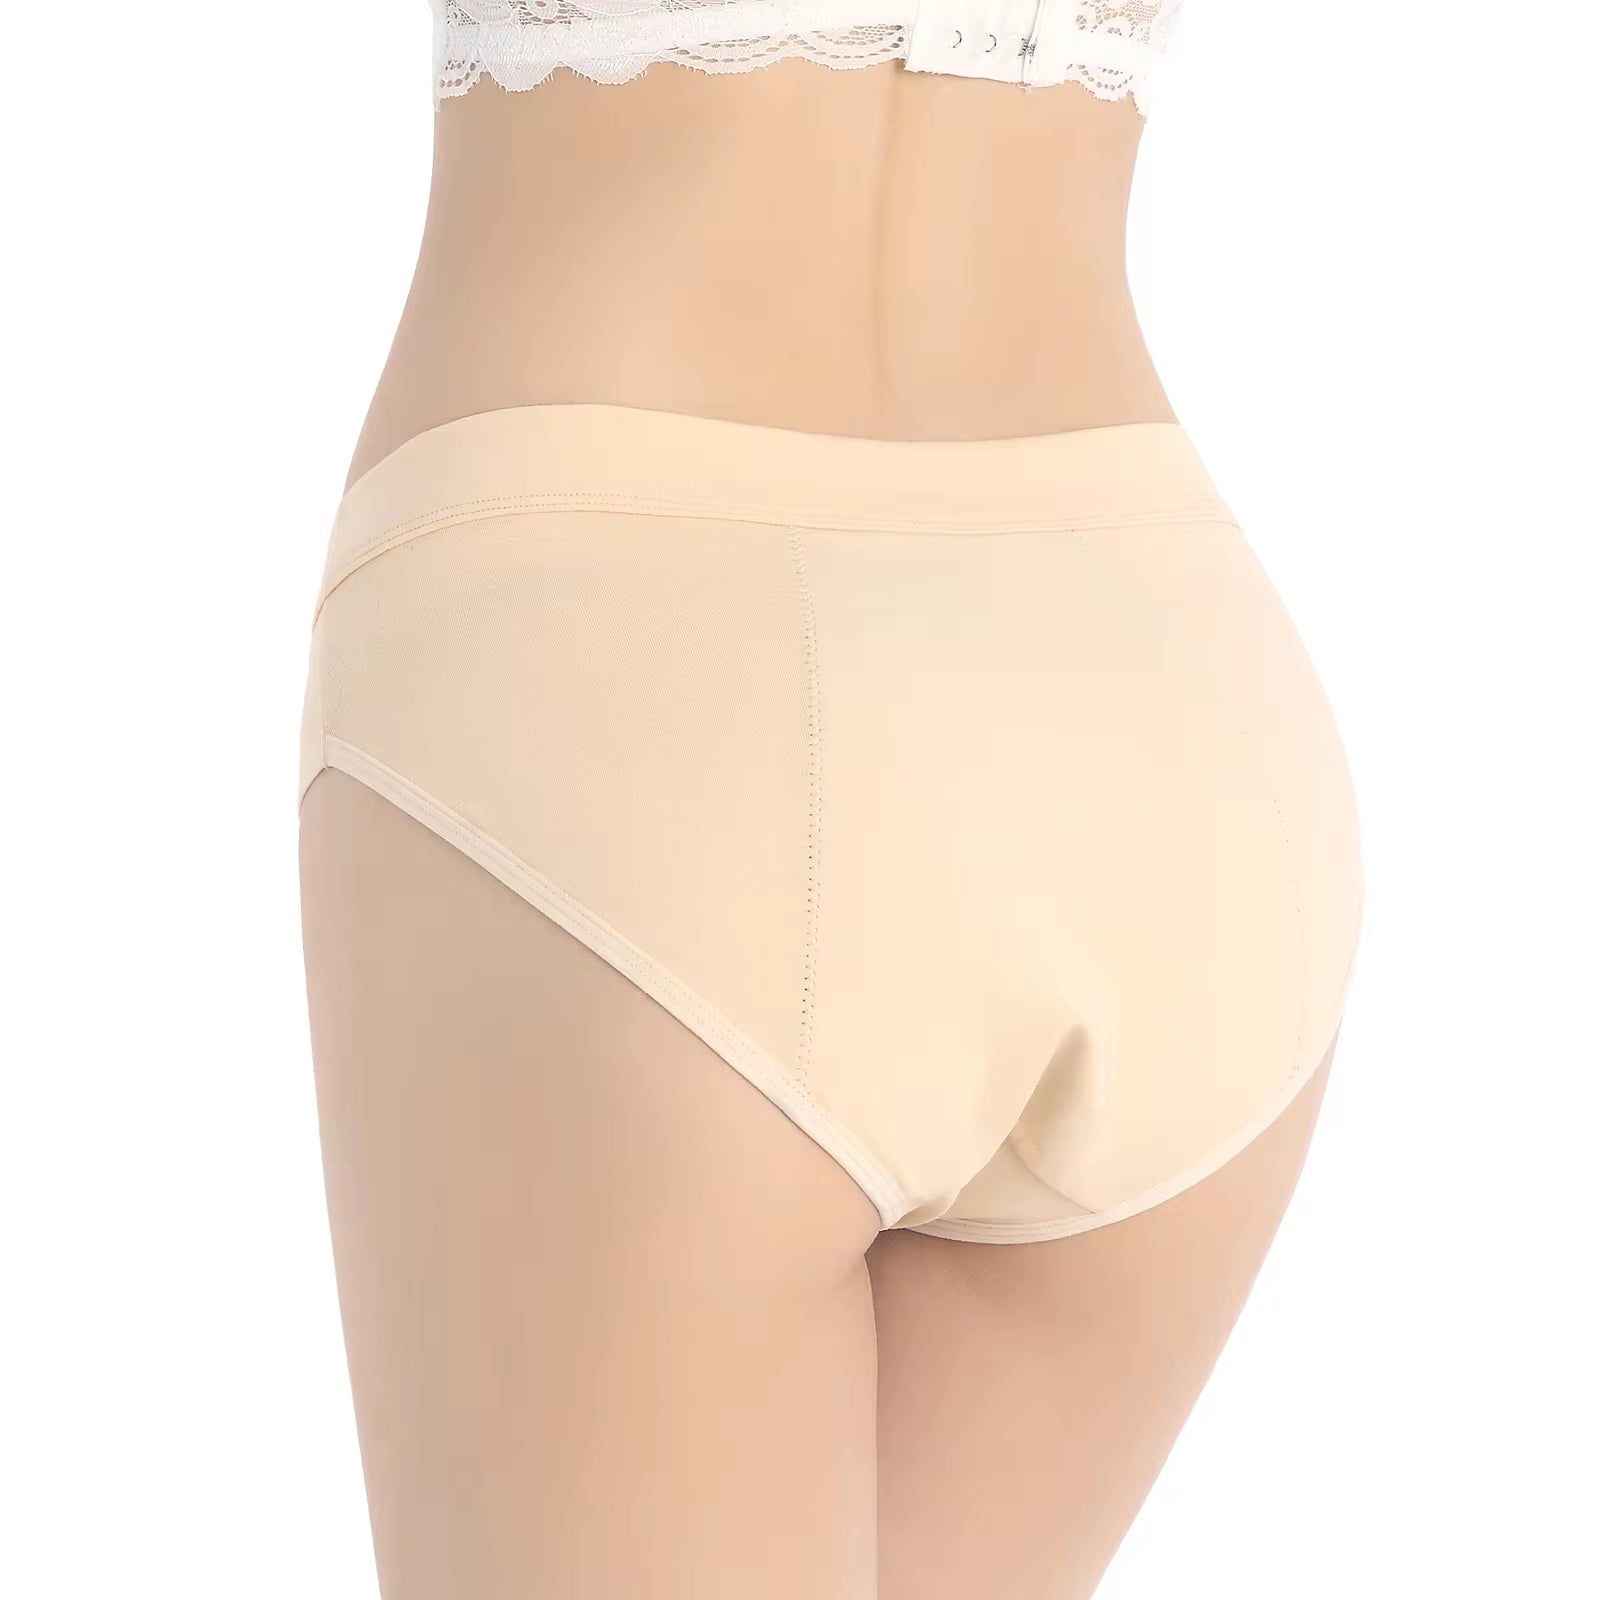 Panties for Women Bikini Underwear Women'S Cotton High Leg Brief Underwear Postpartum Ladies Panties Briefs Breathable Panties